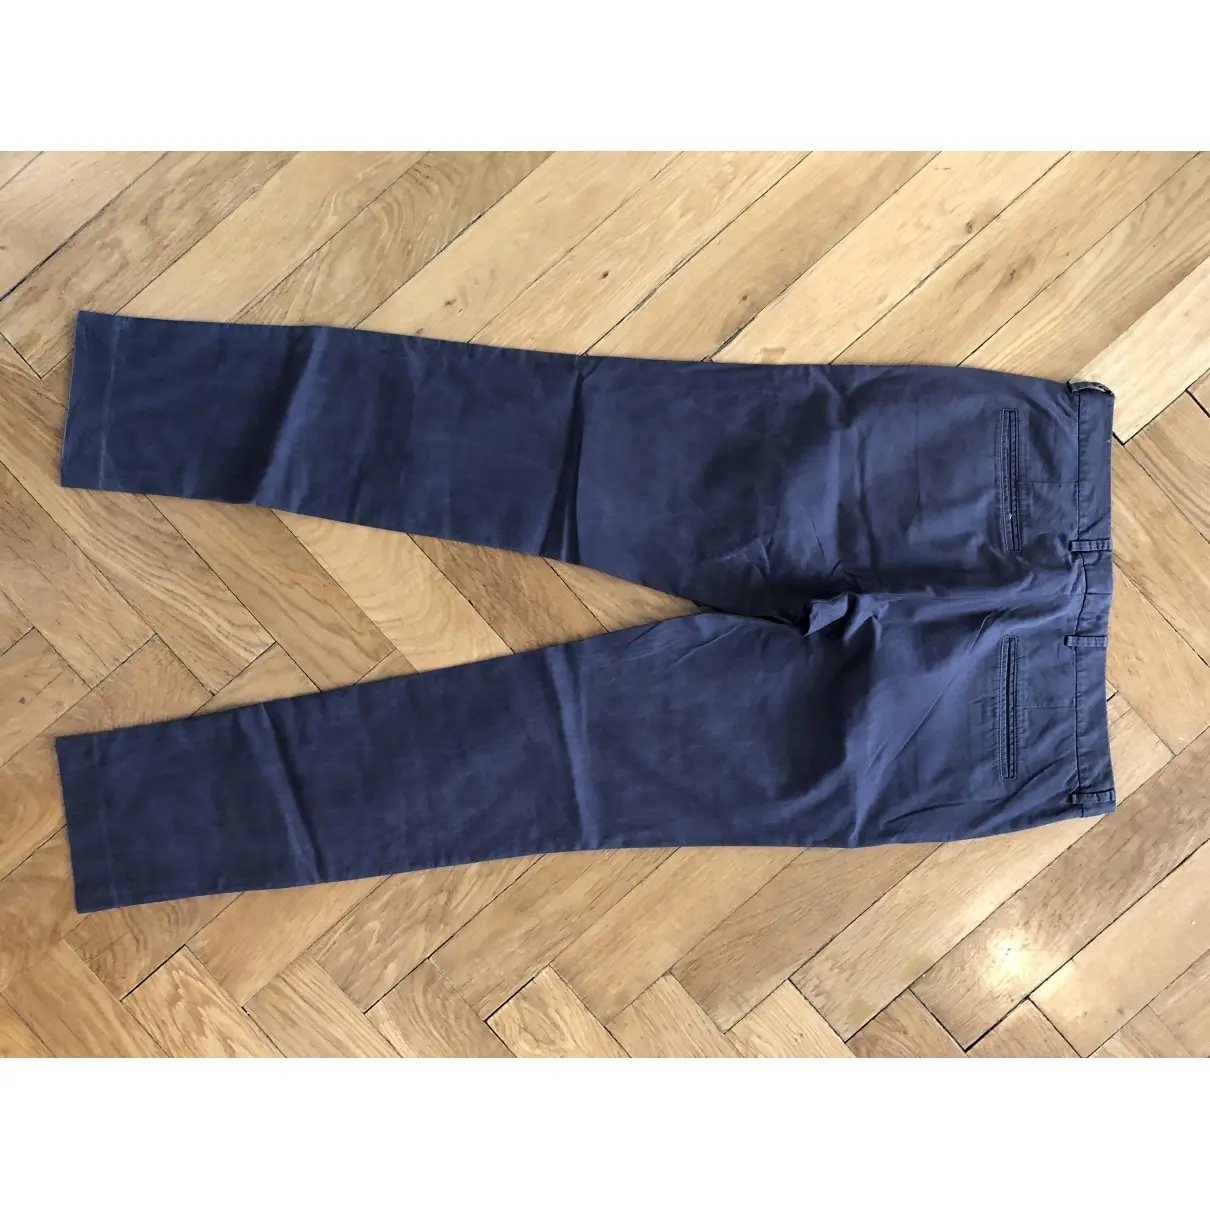 Filippa K Chino pants for sale